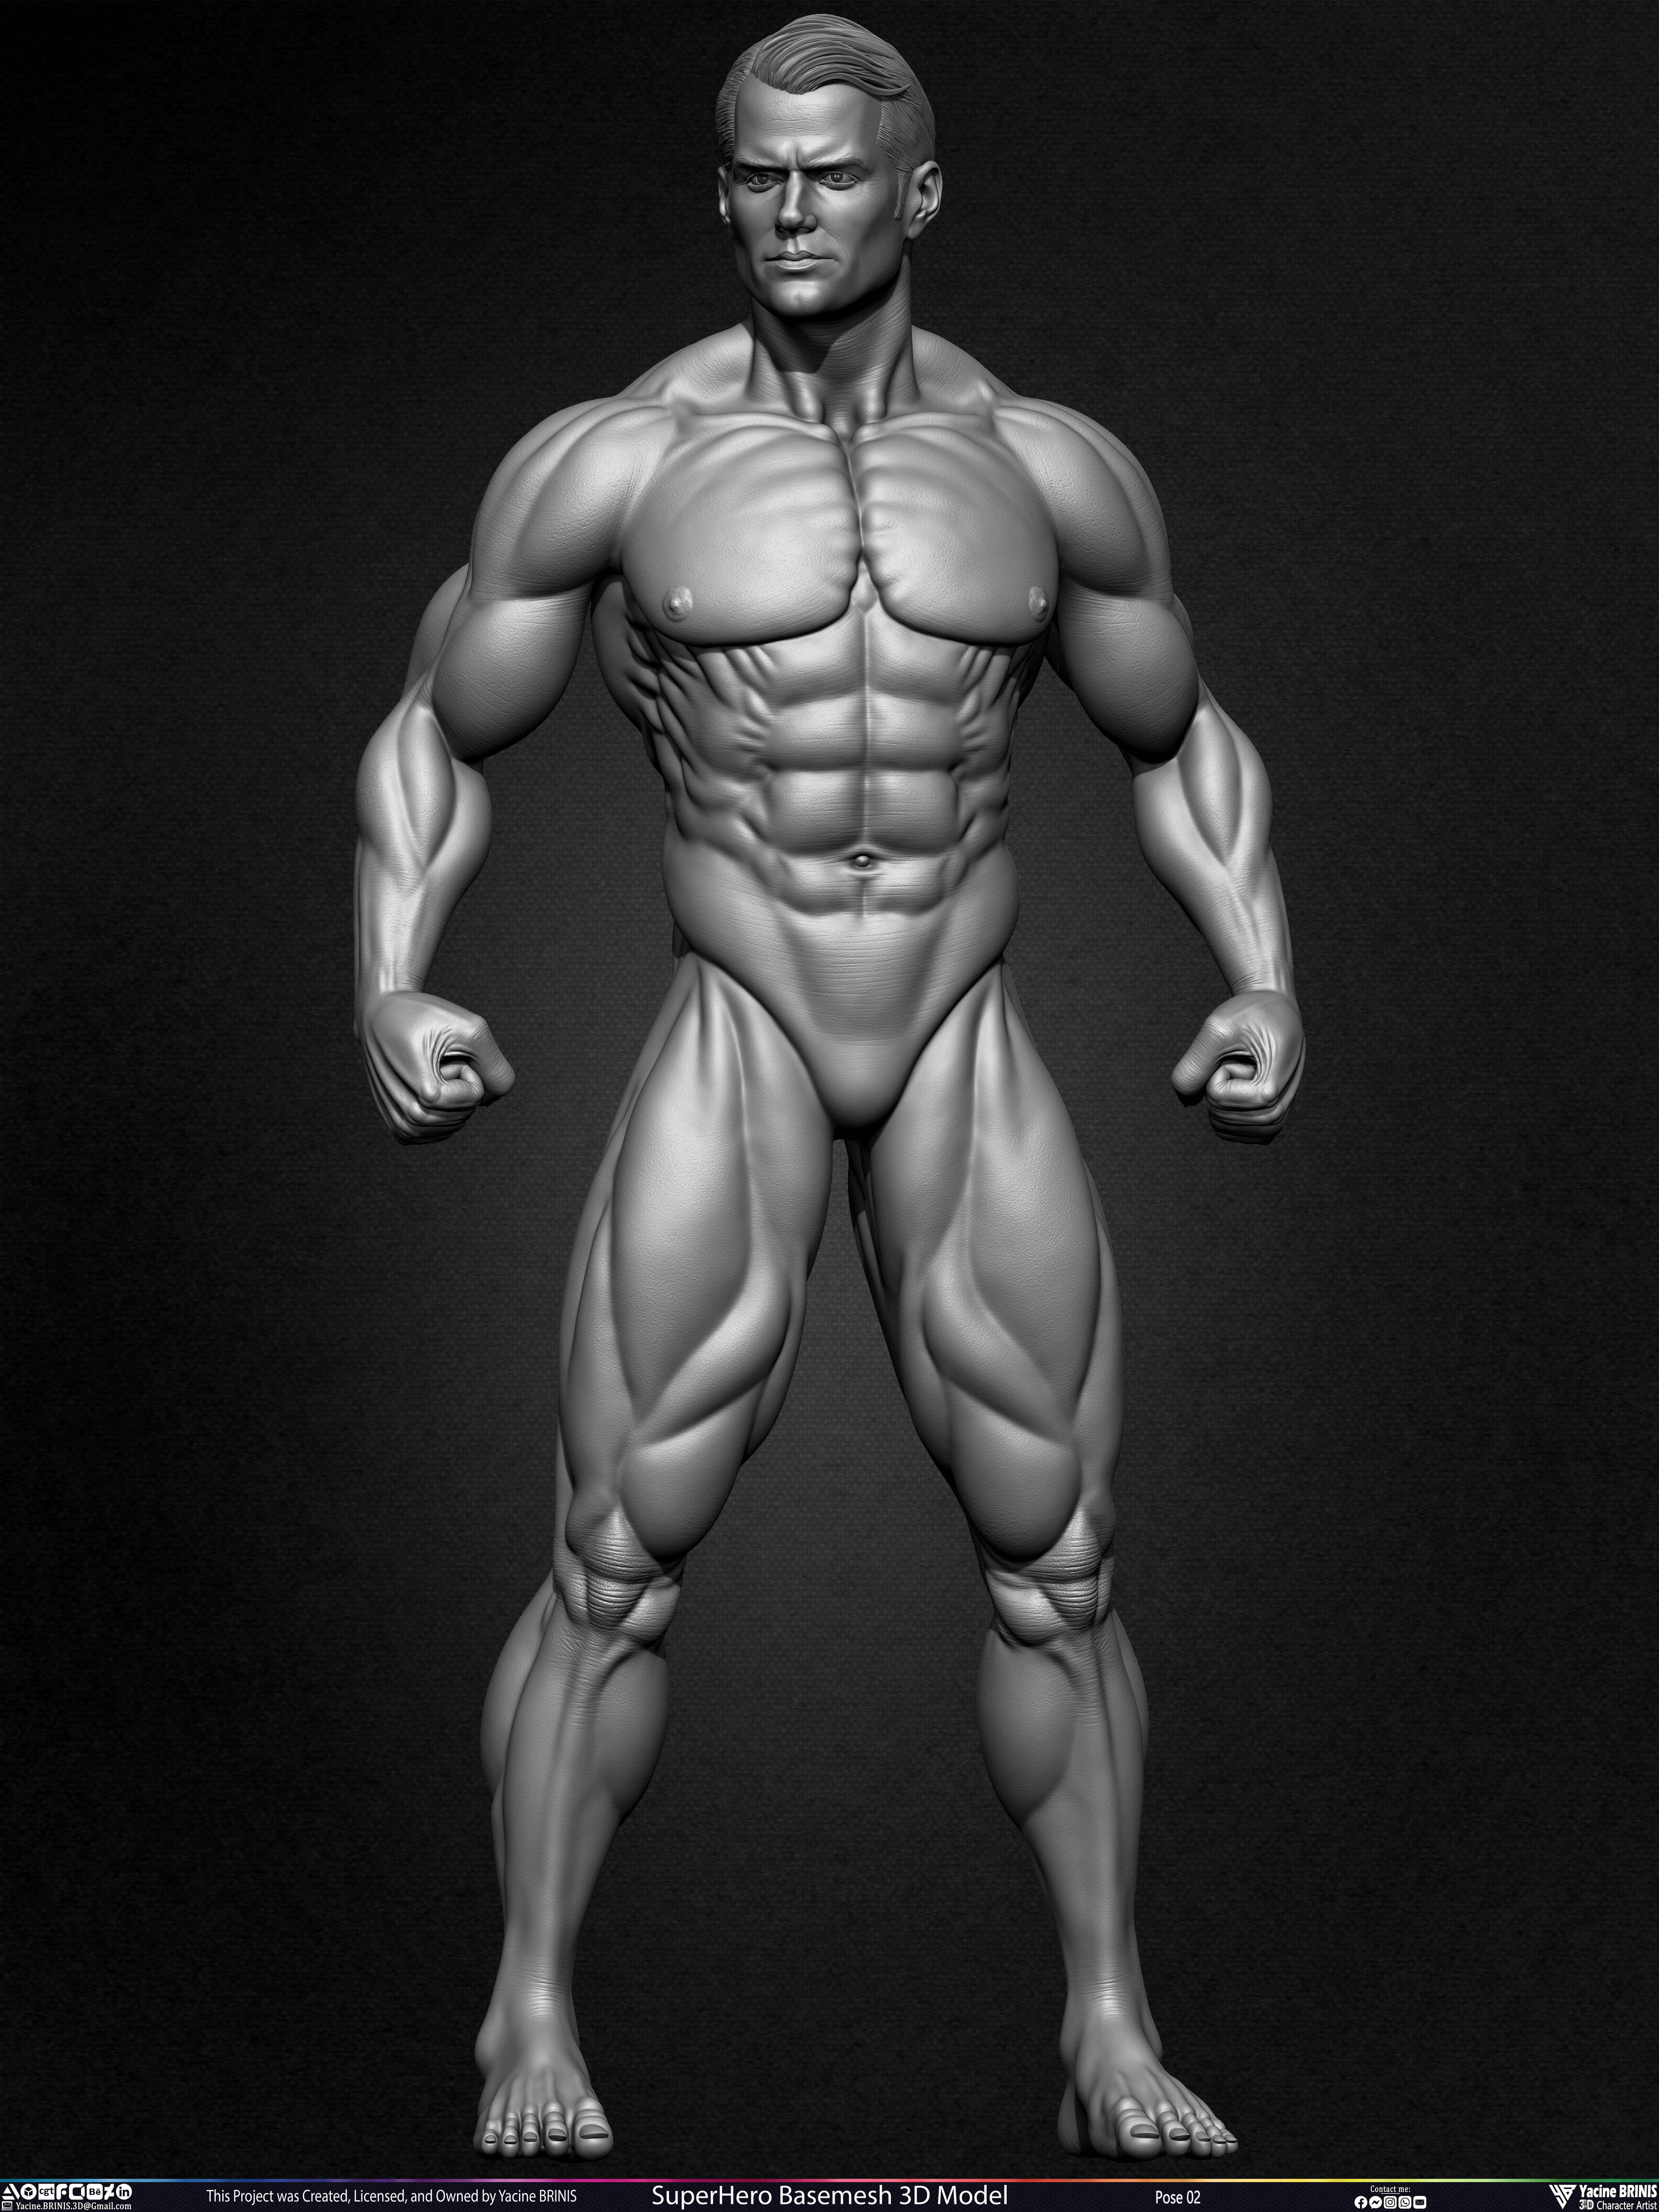 Super-Hero Basemesh 3D Model - Henry Cavill- Man of Steel - Superman - Pose 02 Sculpted by Yacine BRINIS Set 002